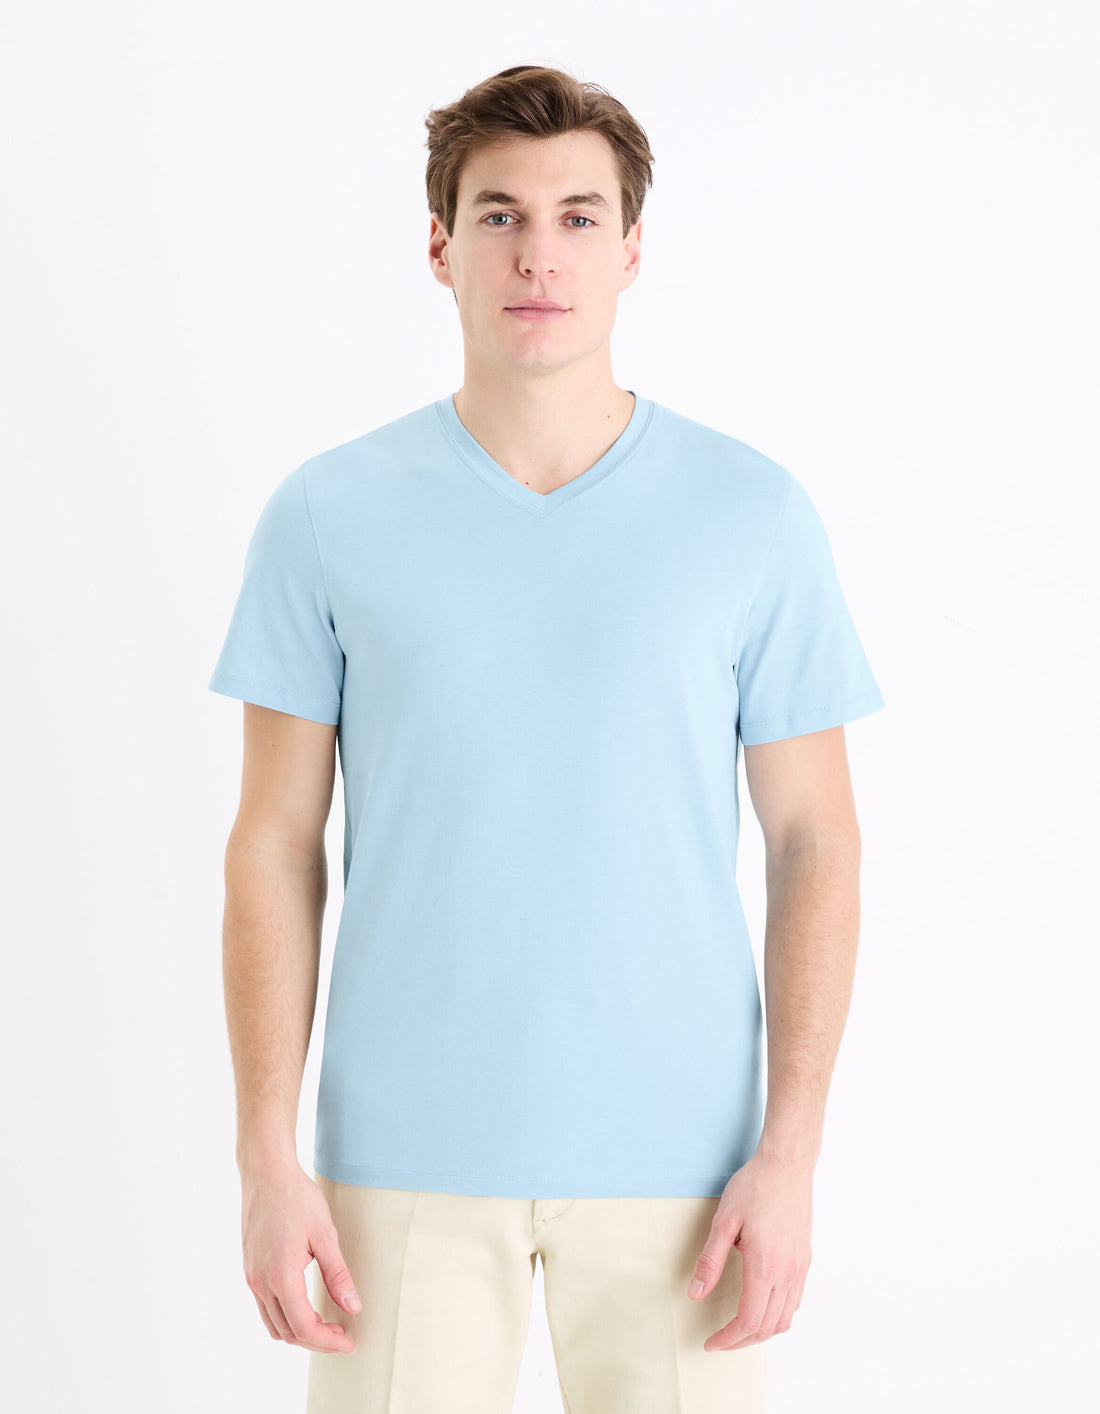 V-Neck T-Shirt 100% Cotton_DEBASEV_AIR BLUE_01